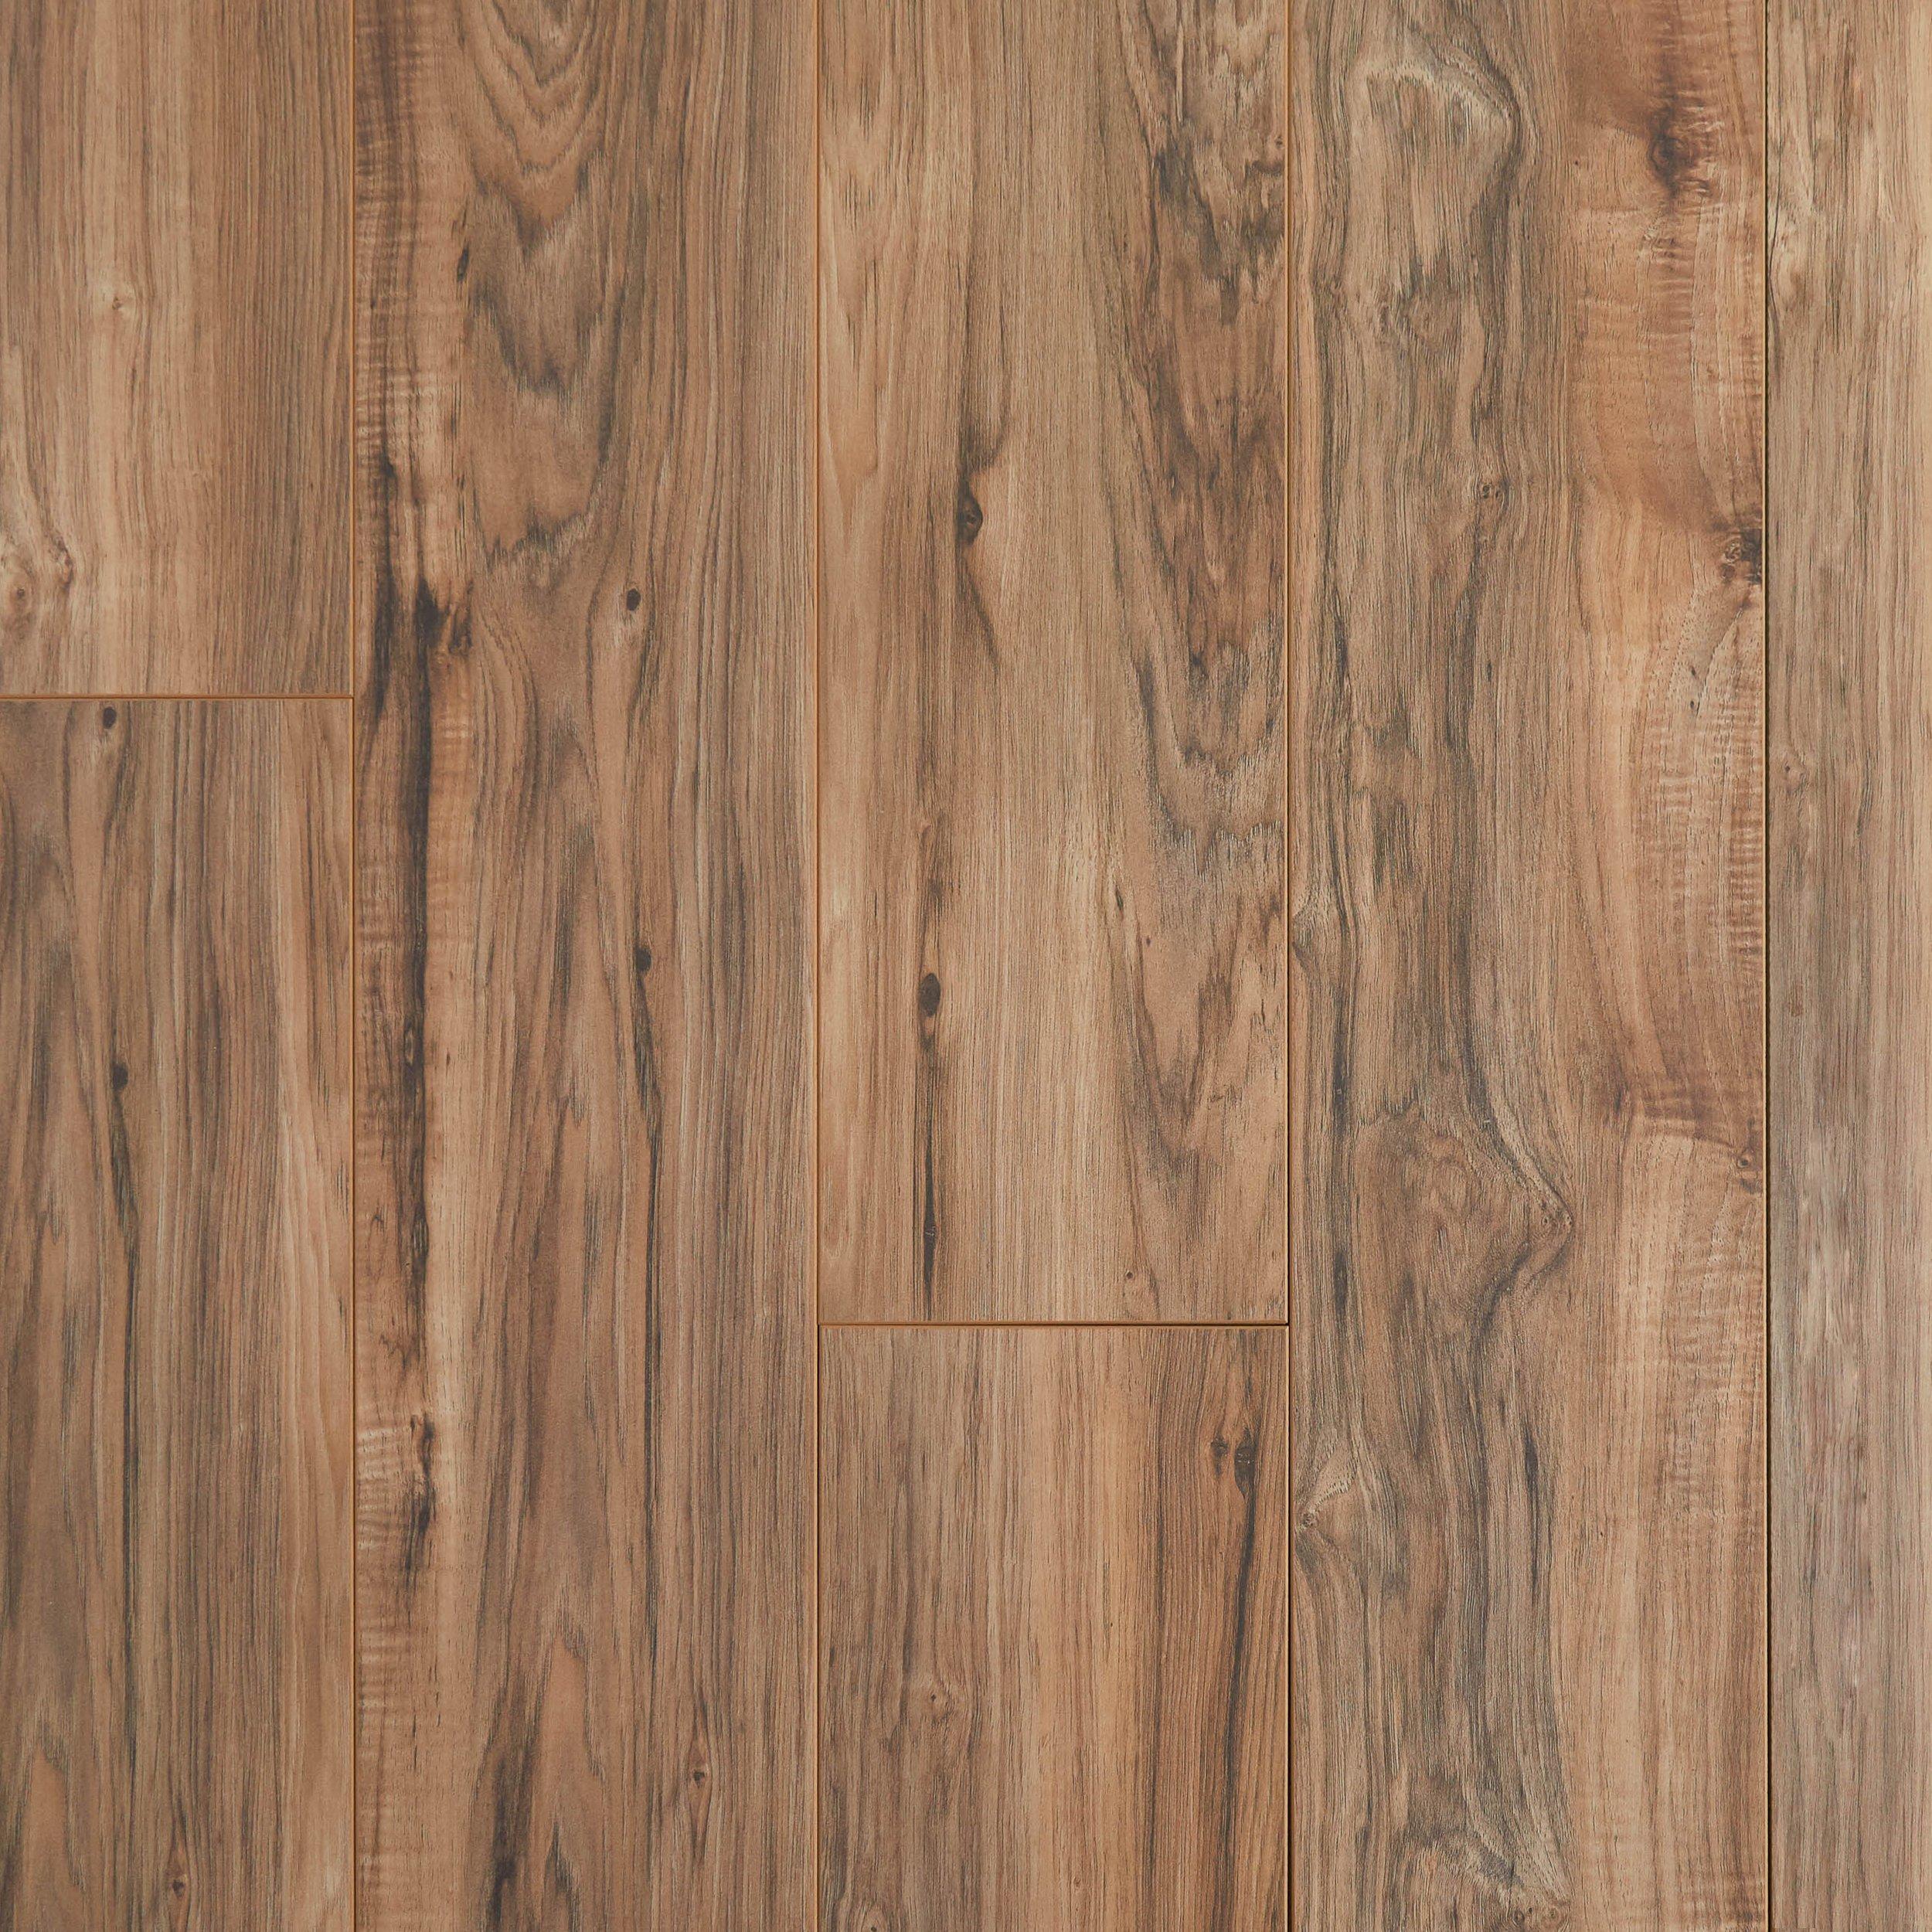 Alder Pecan Tan Water Resistant, Pecan Wood Laminate Flooring Cost